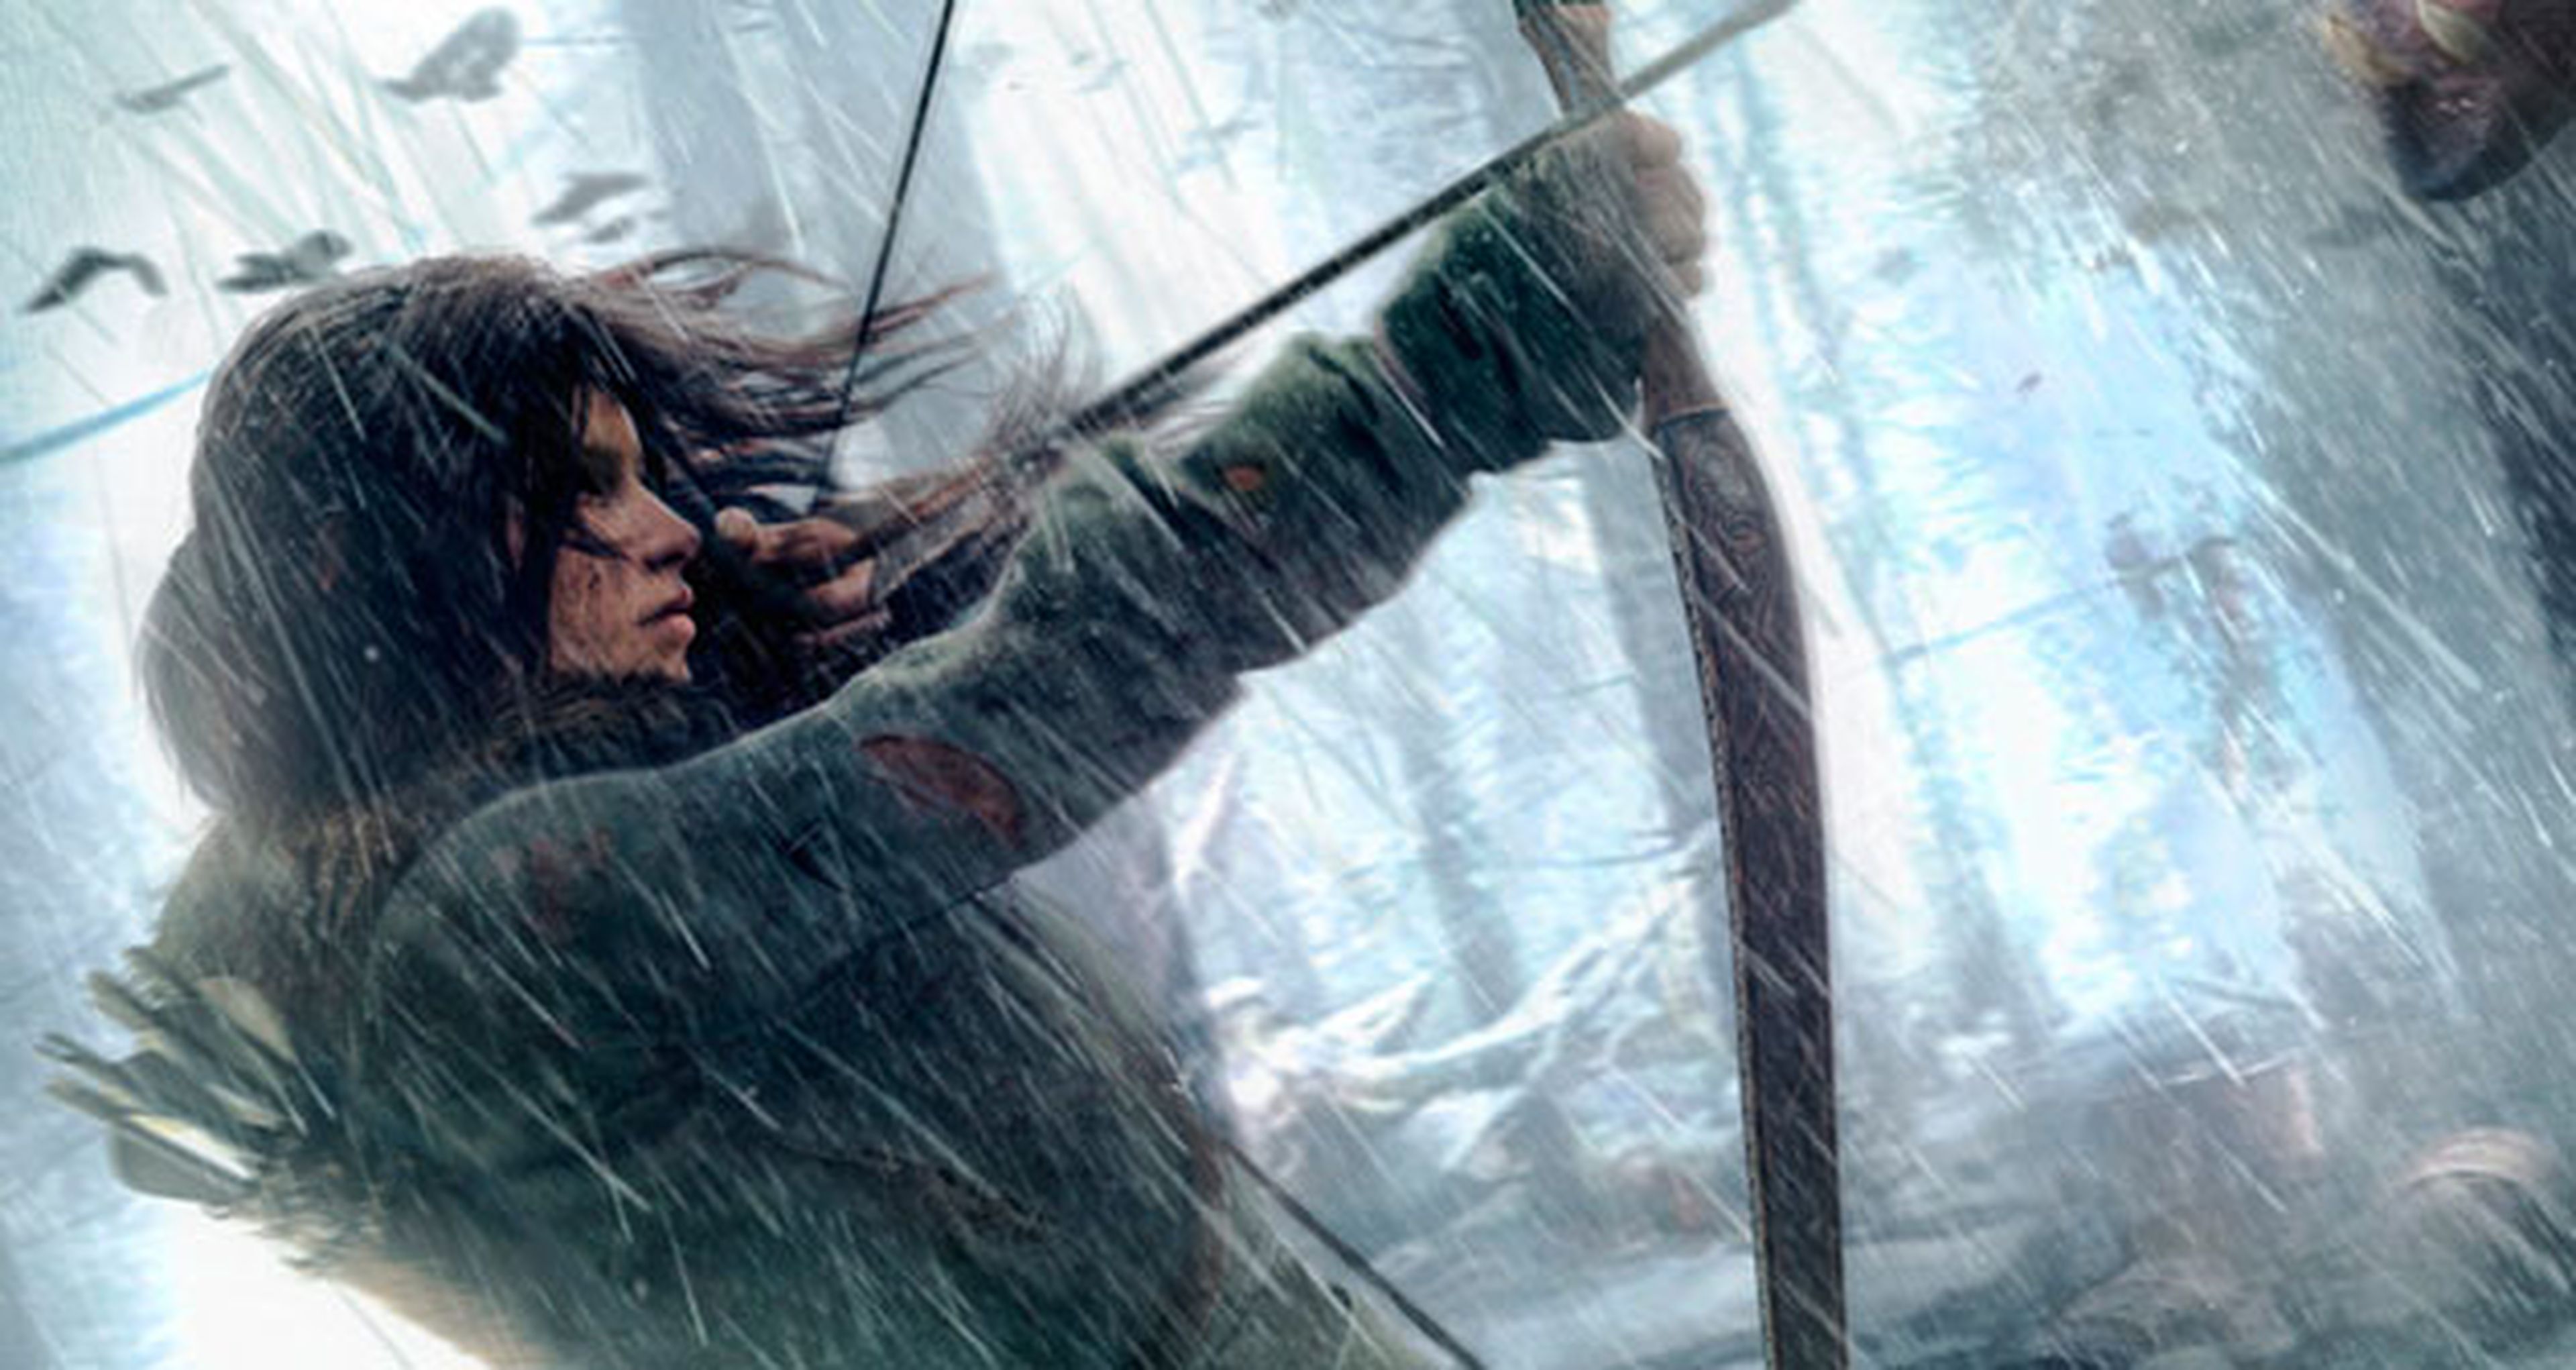 Rise of the Tomb Raider, con regalo por reserva en GAME